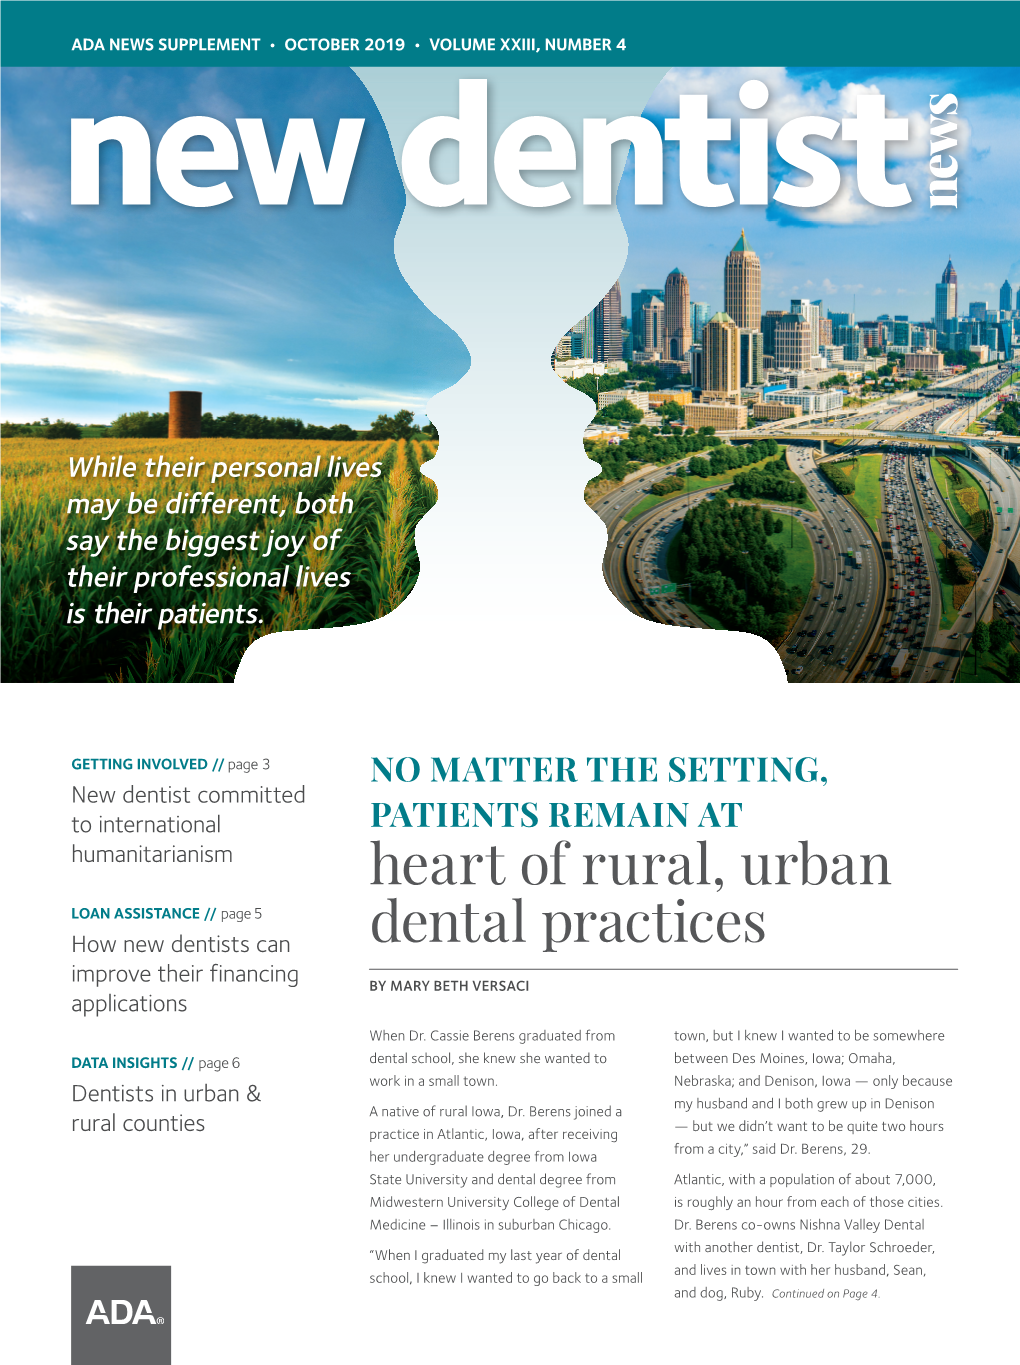 Heart of Rural, Urban Dental Practices